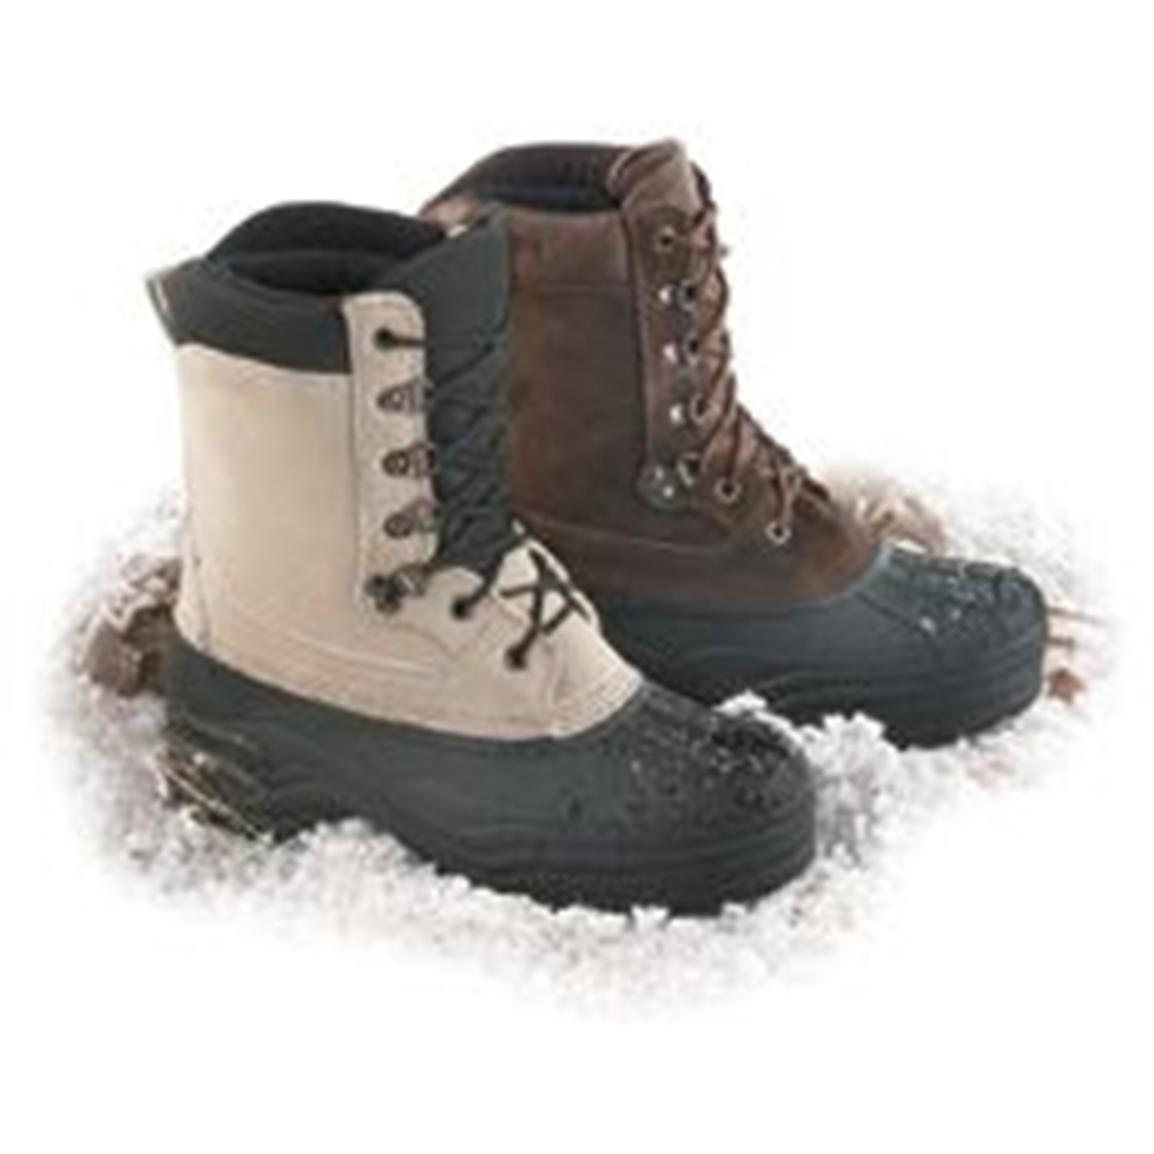 itasca granite peak pac boots